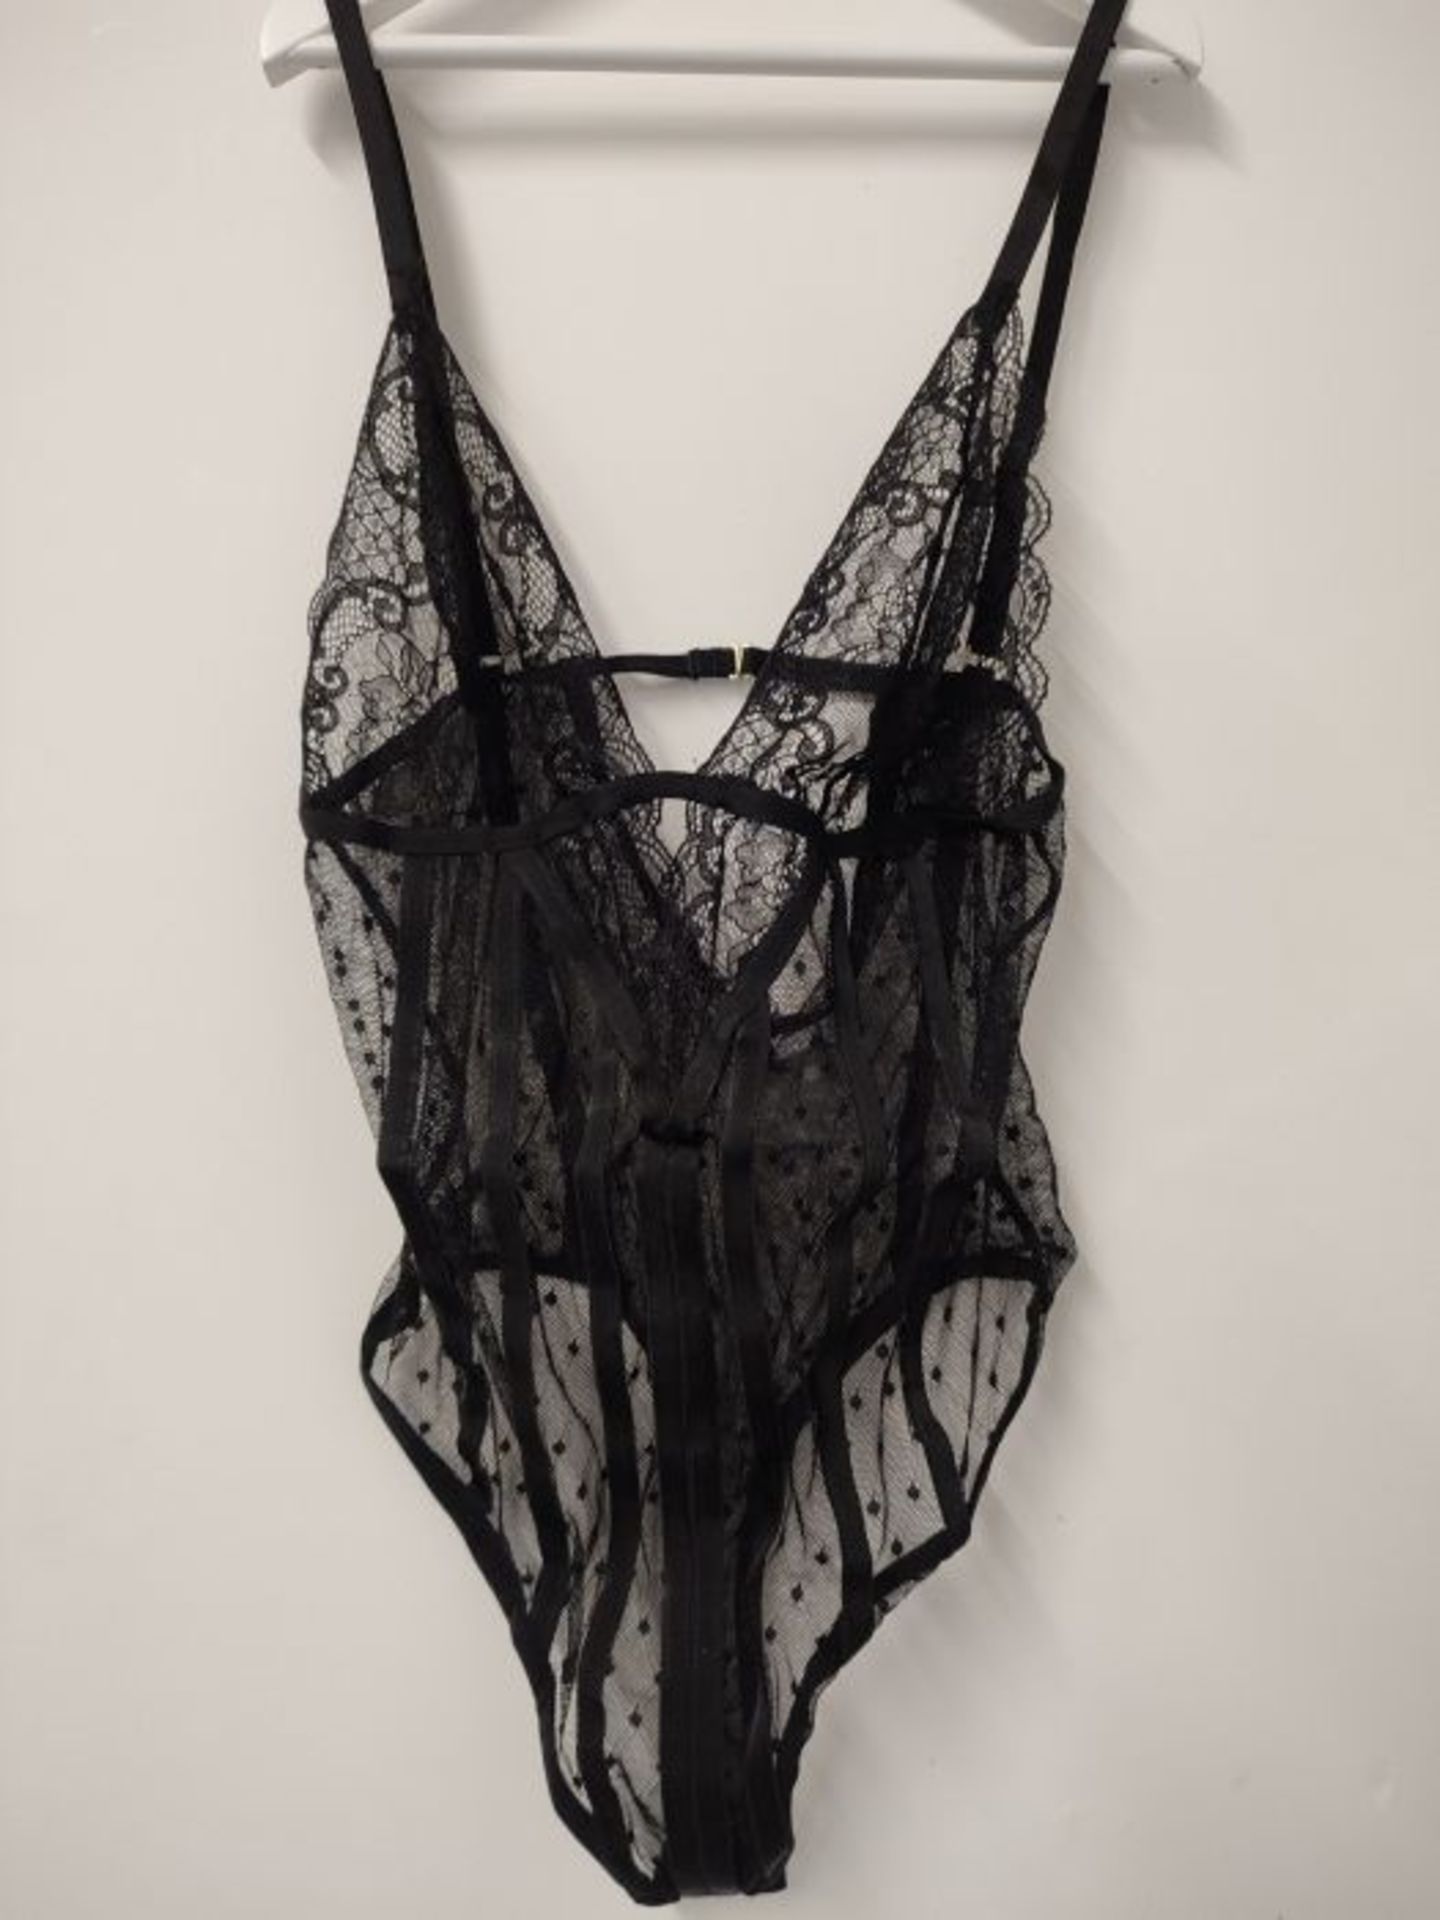 Rene Rofe Women's Erotic Leather and Latex Underwear, Small/Medium 100g - Image 3 of 3